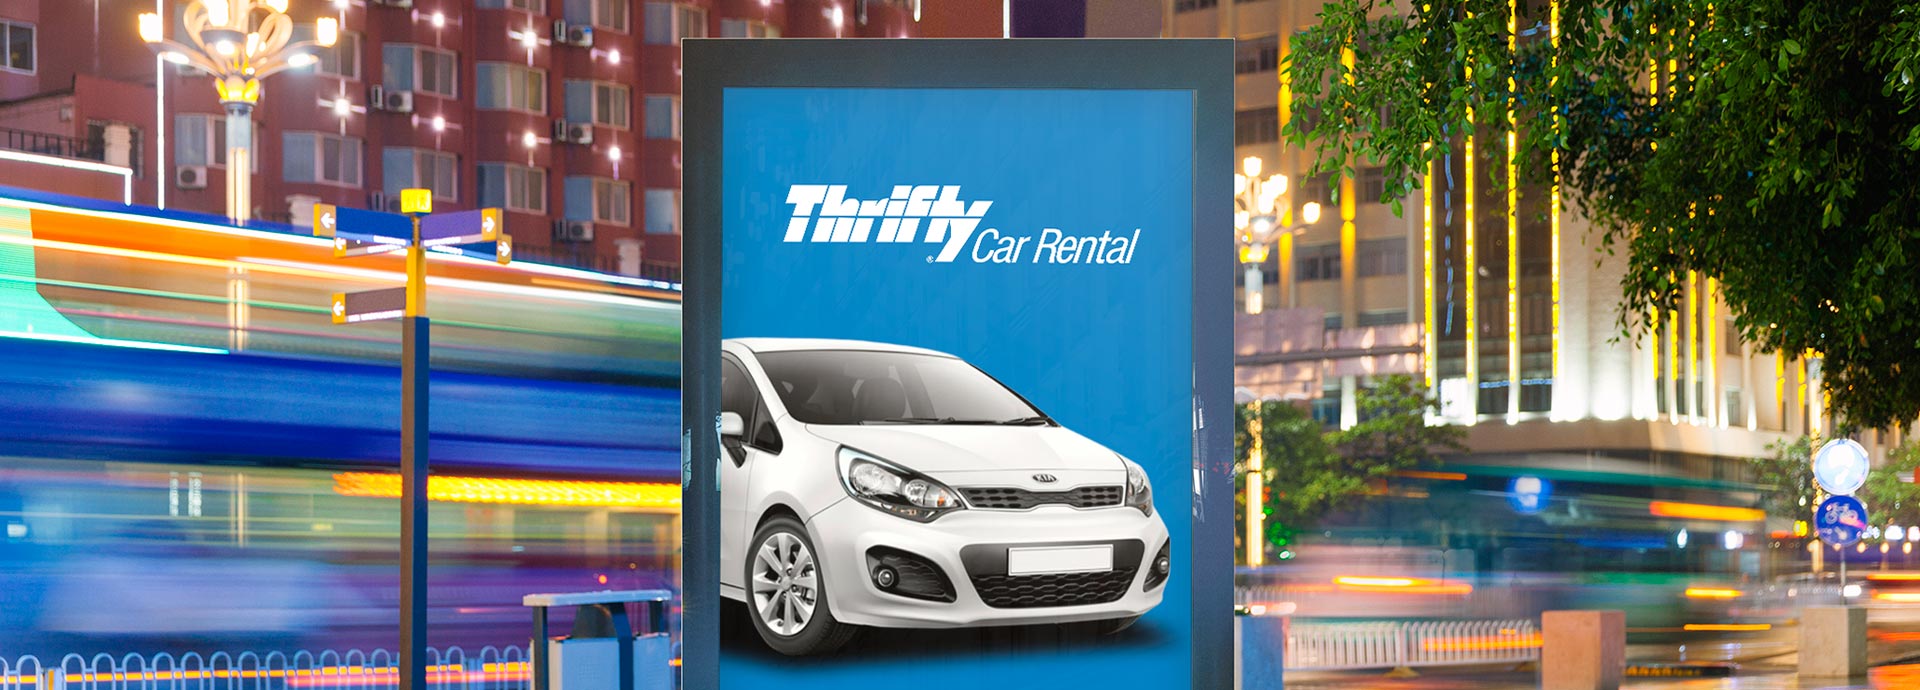 Thrifty Rent a Car | Alquiler de carros | RentingCarz Colombia